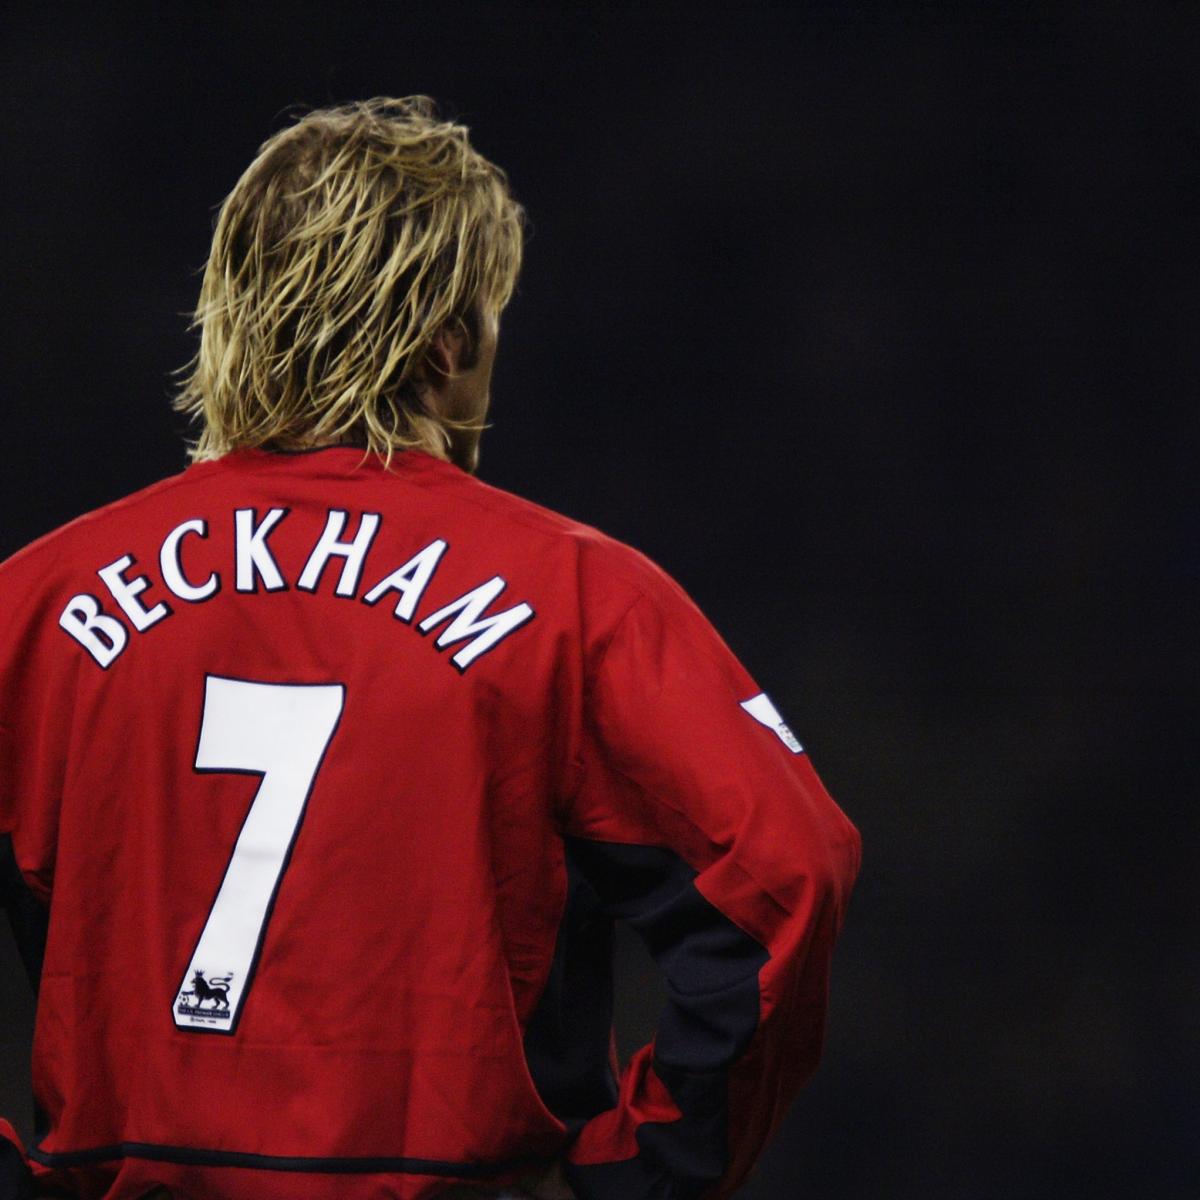 David Beckham Says Manchester United's No. 7 Shirt Should Be an Inspiration, News, Scores, Highlights, Stats, and Rumors